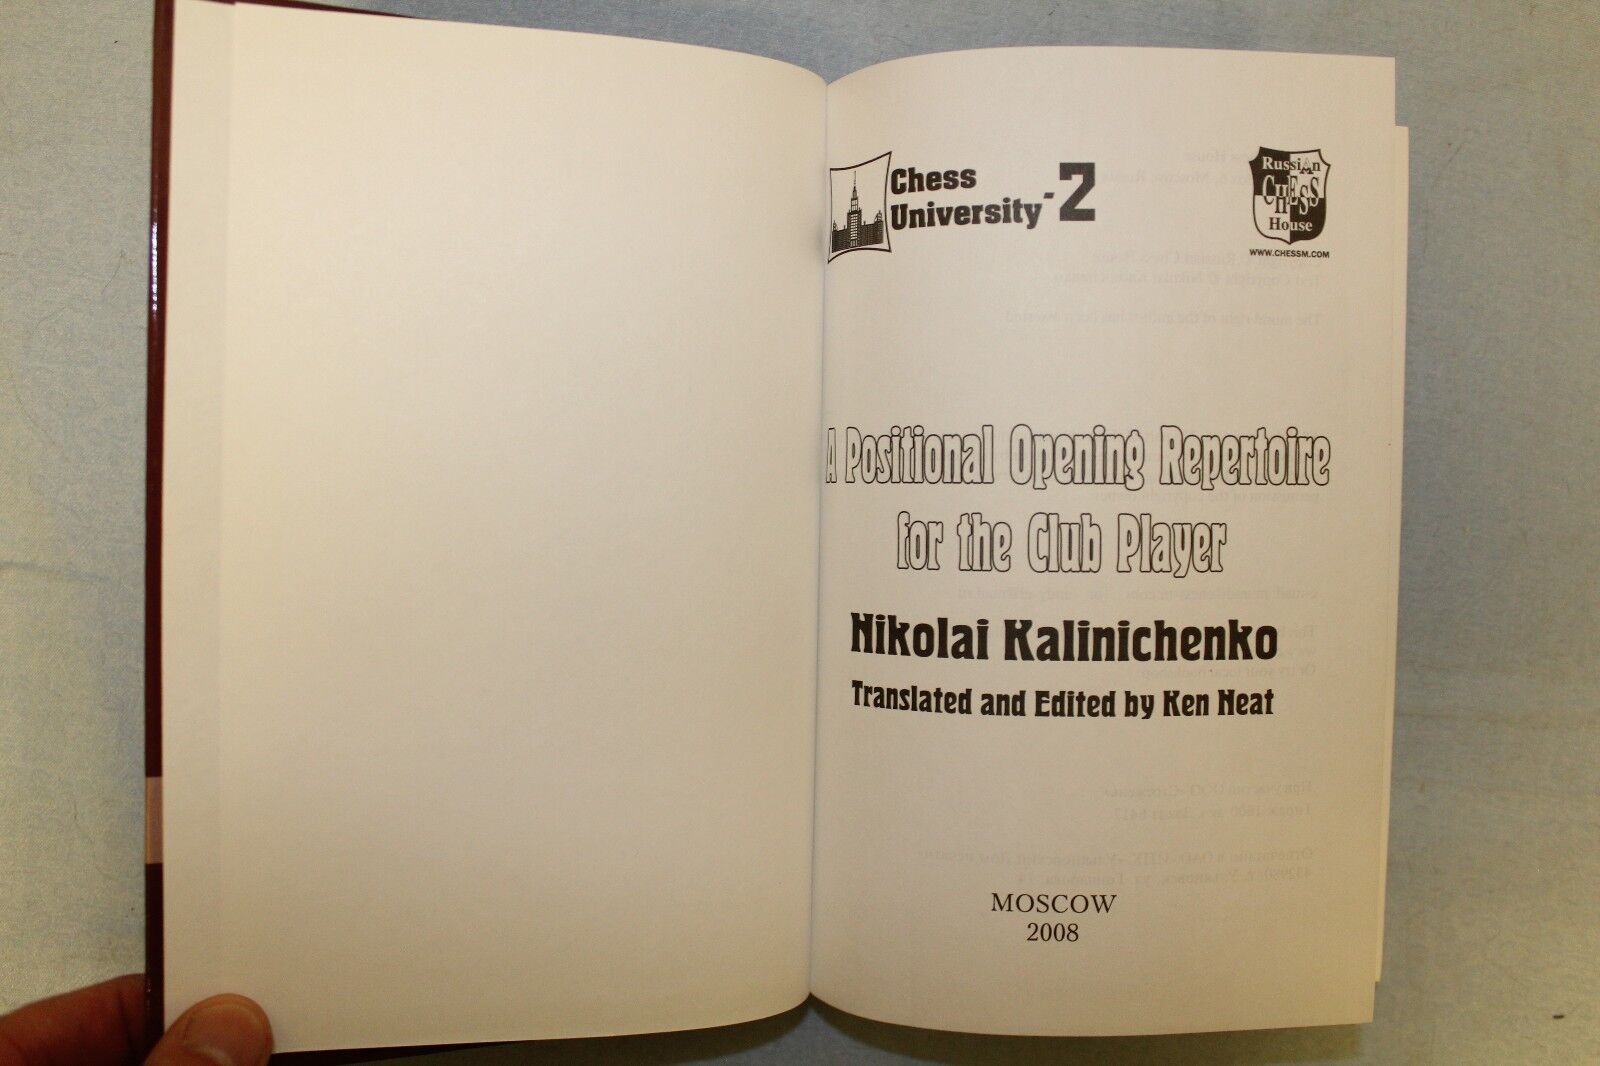 11083.Chess Book: Ilya Odessky. English Defence. 2007